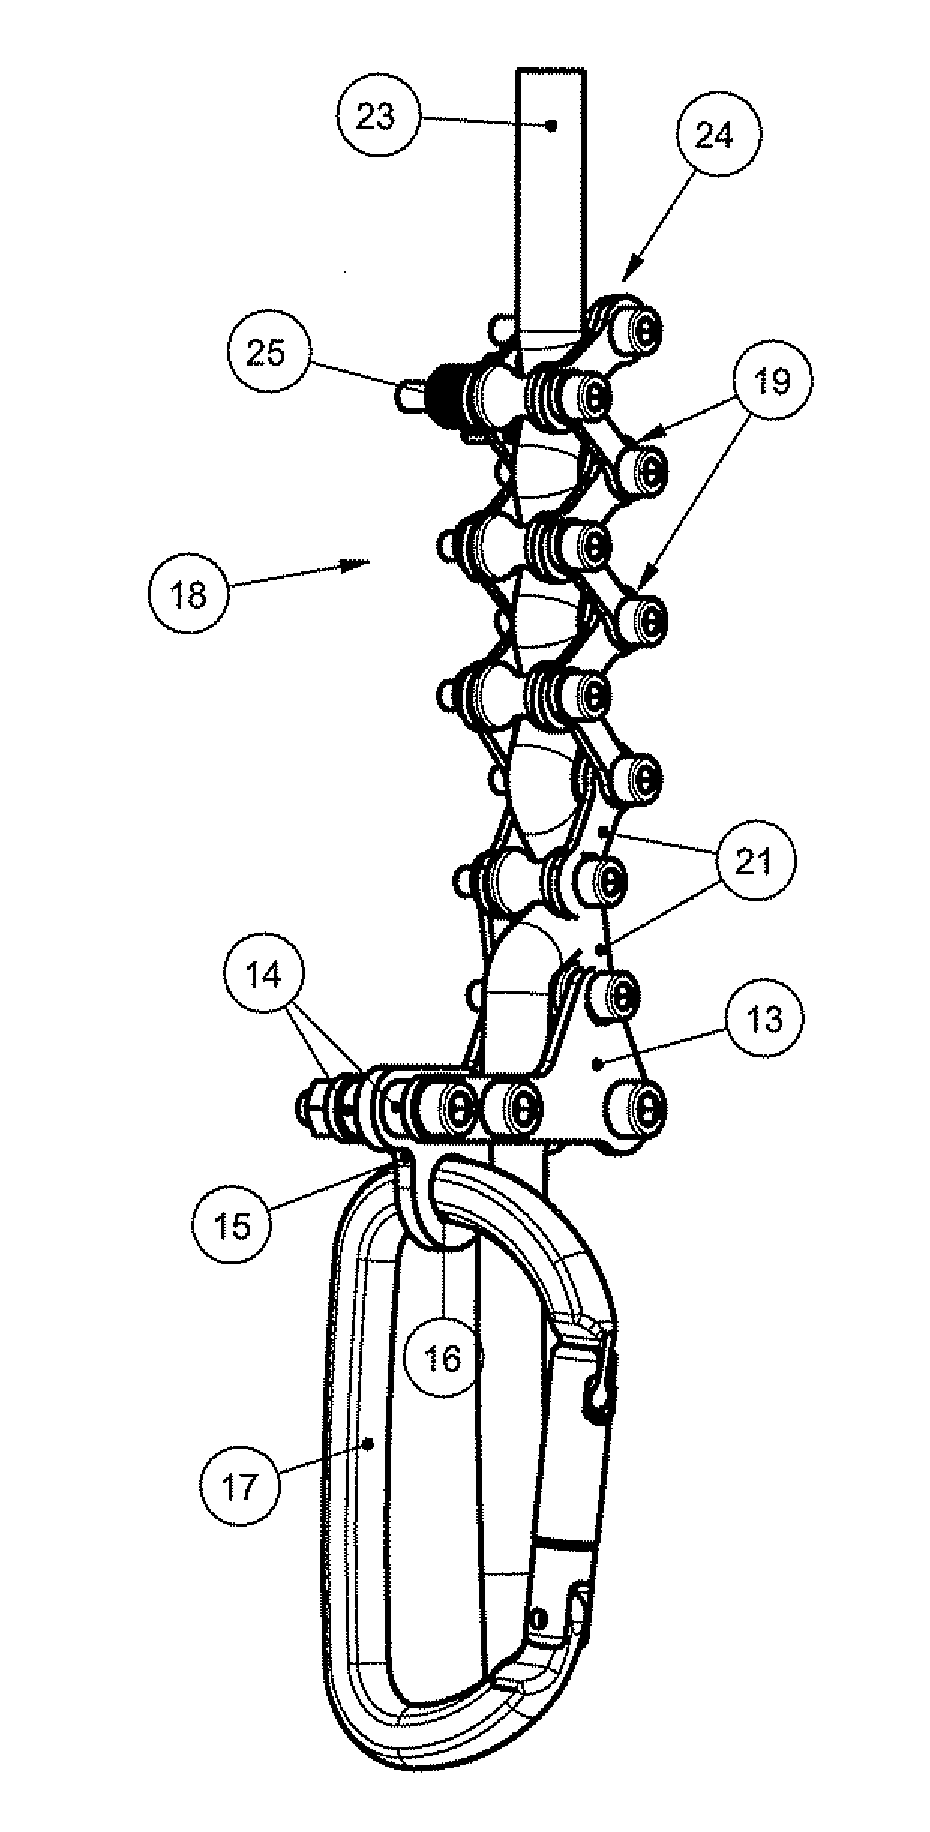 Ascender/descender appliance for climbing and decending on a rope